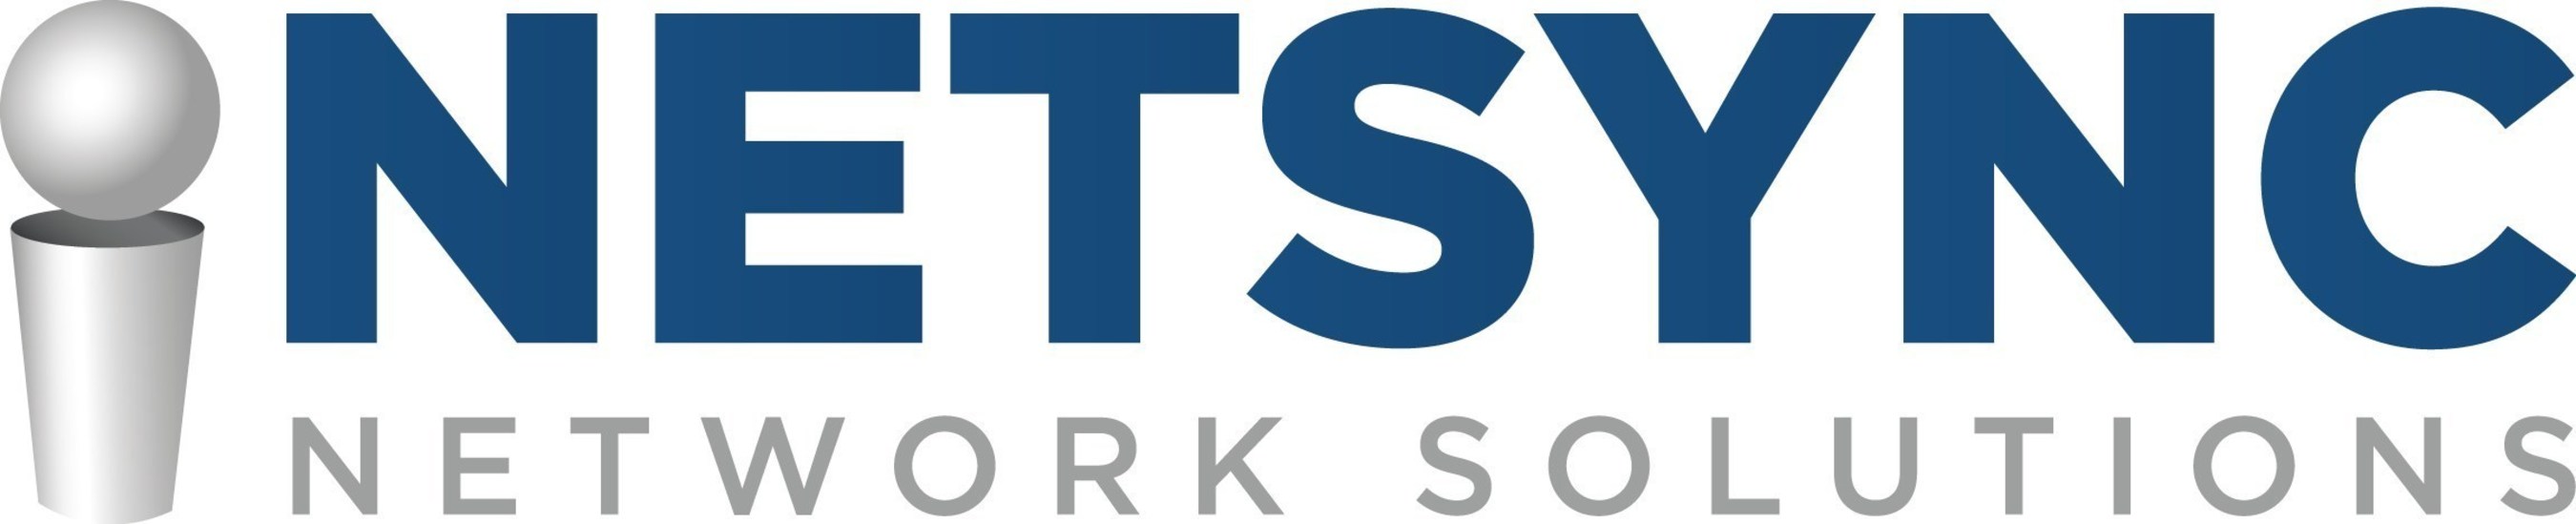 Netsync logo (PRNewsFoto/Netsync Network Solutions)